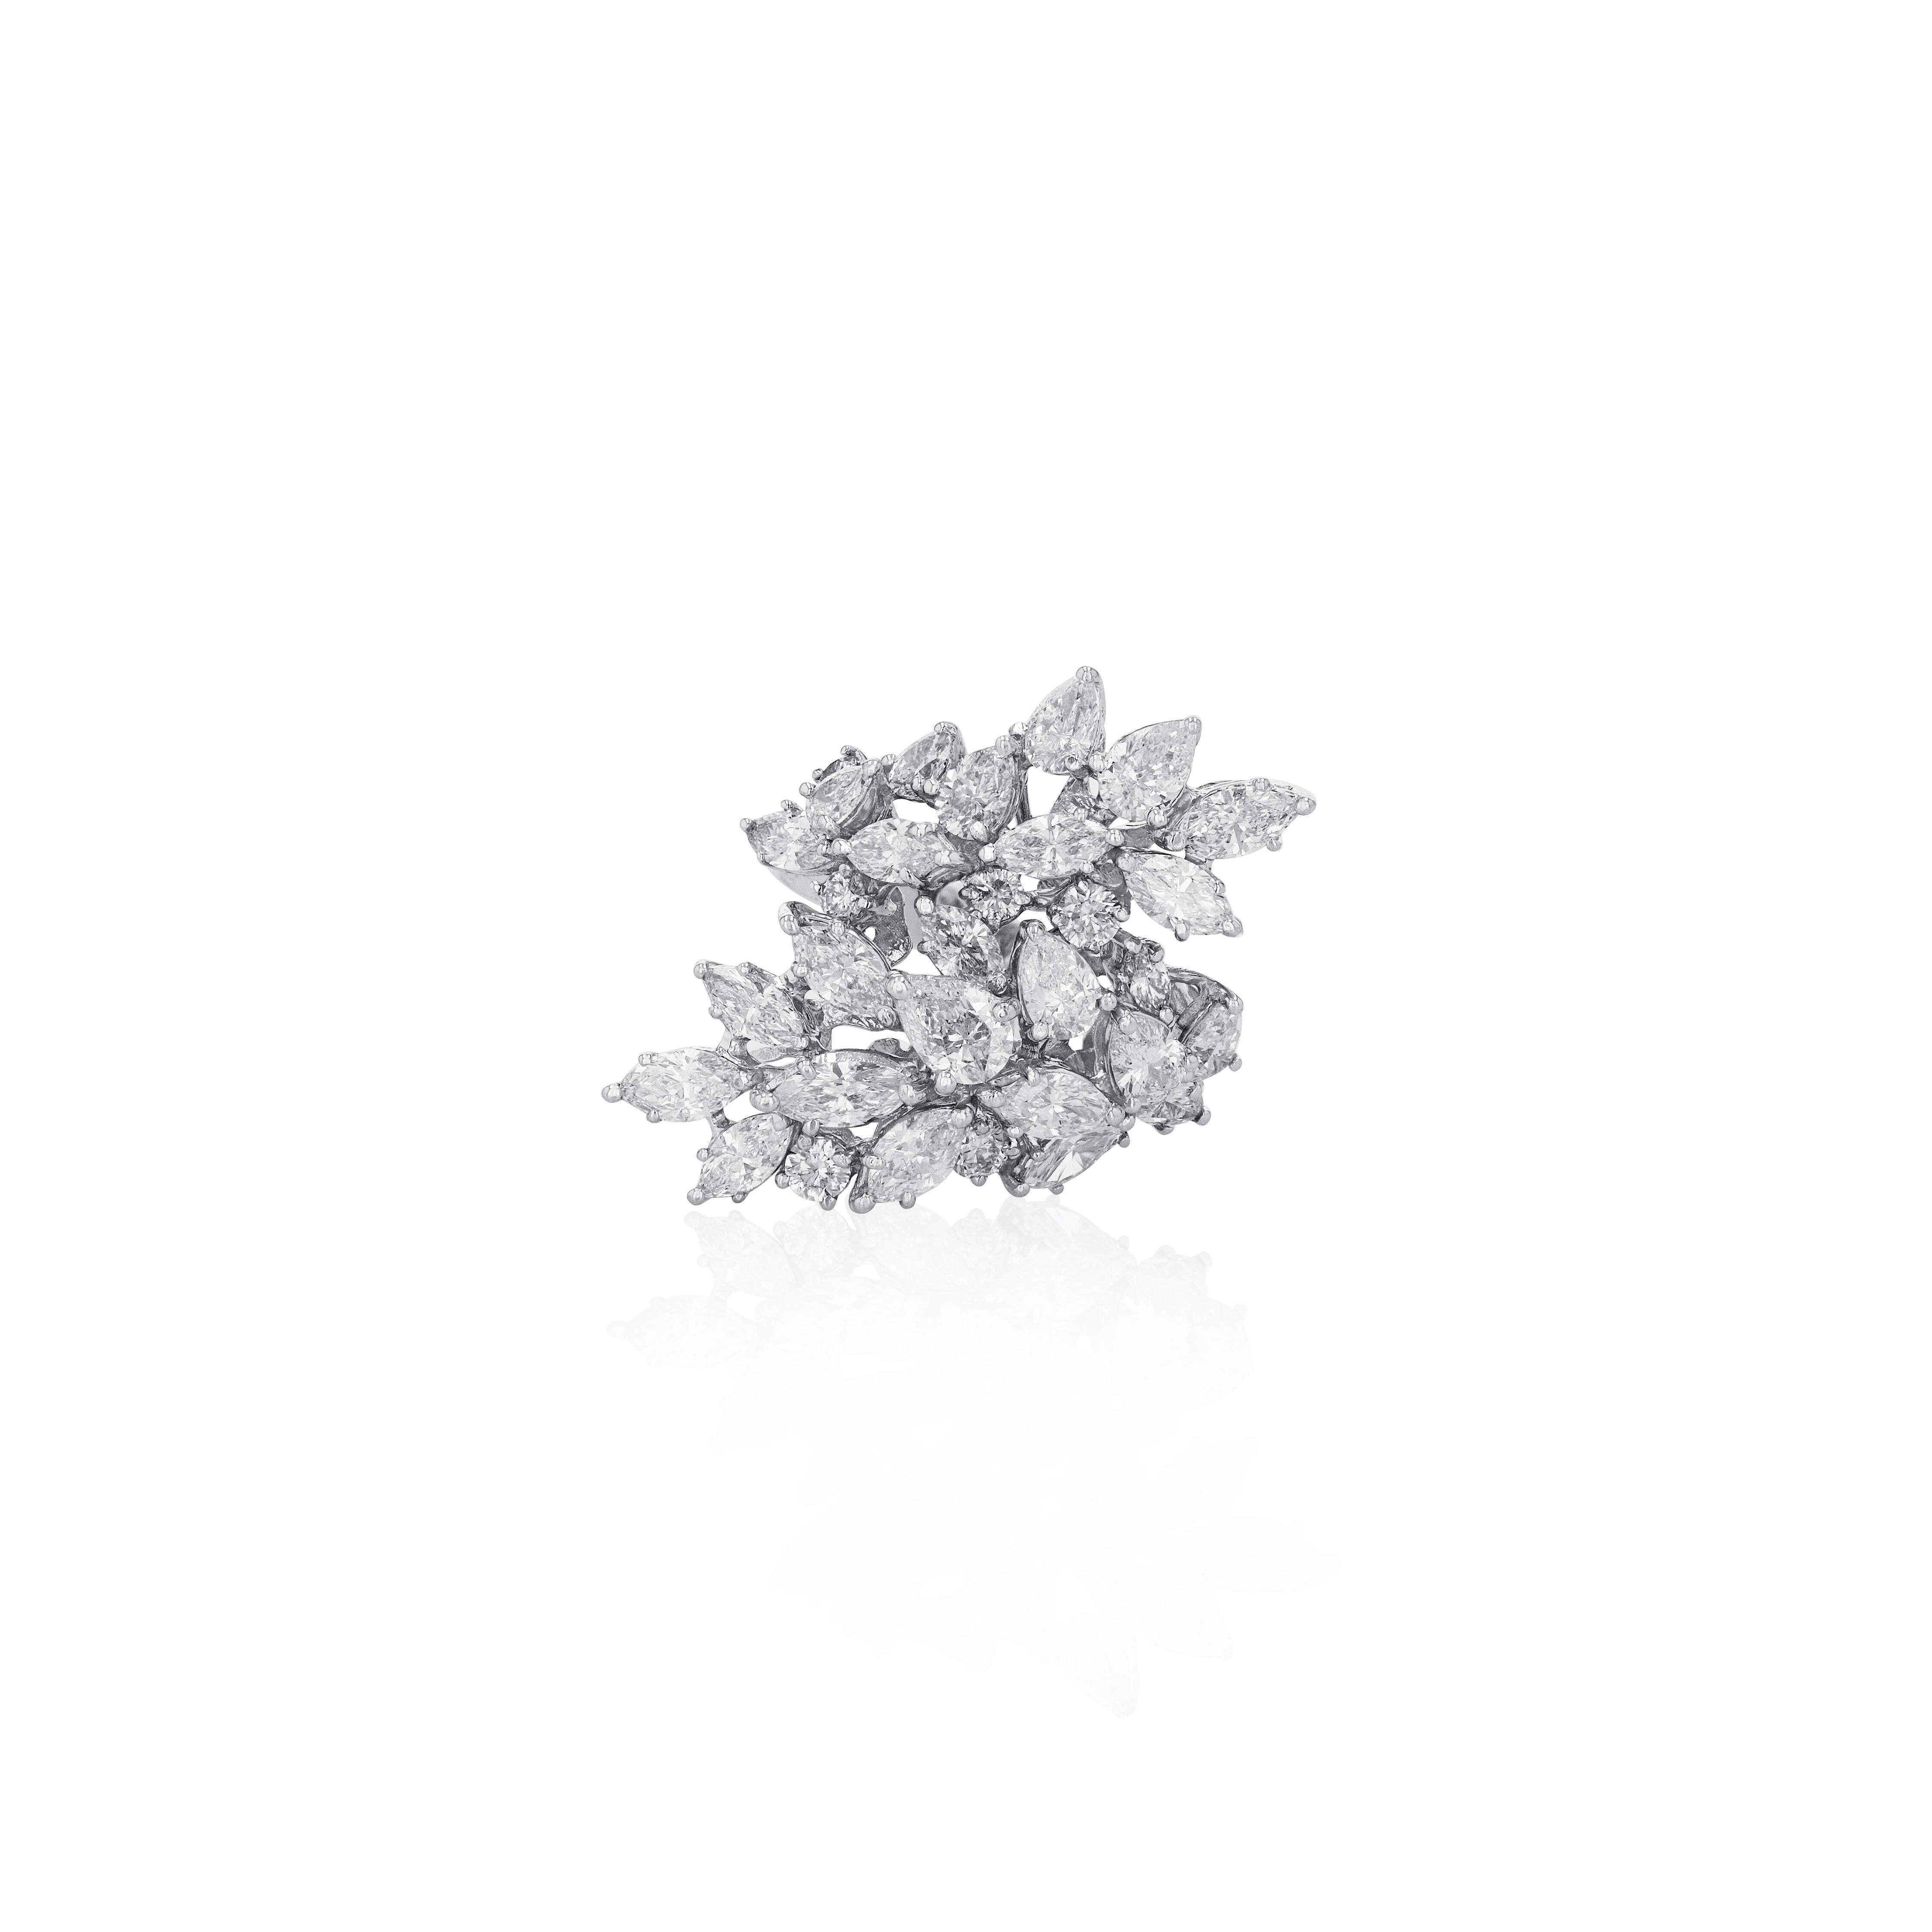 Modern Amwaj Jewelry Pear and Marquise Cut Diamonds Ring in 18 Karat White Gold